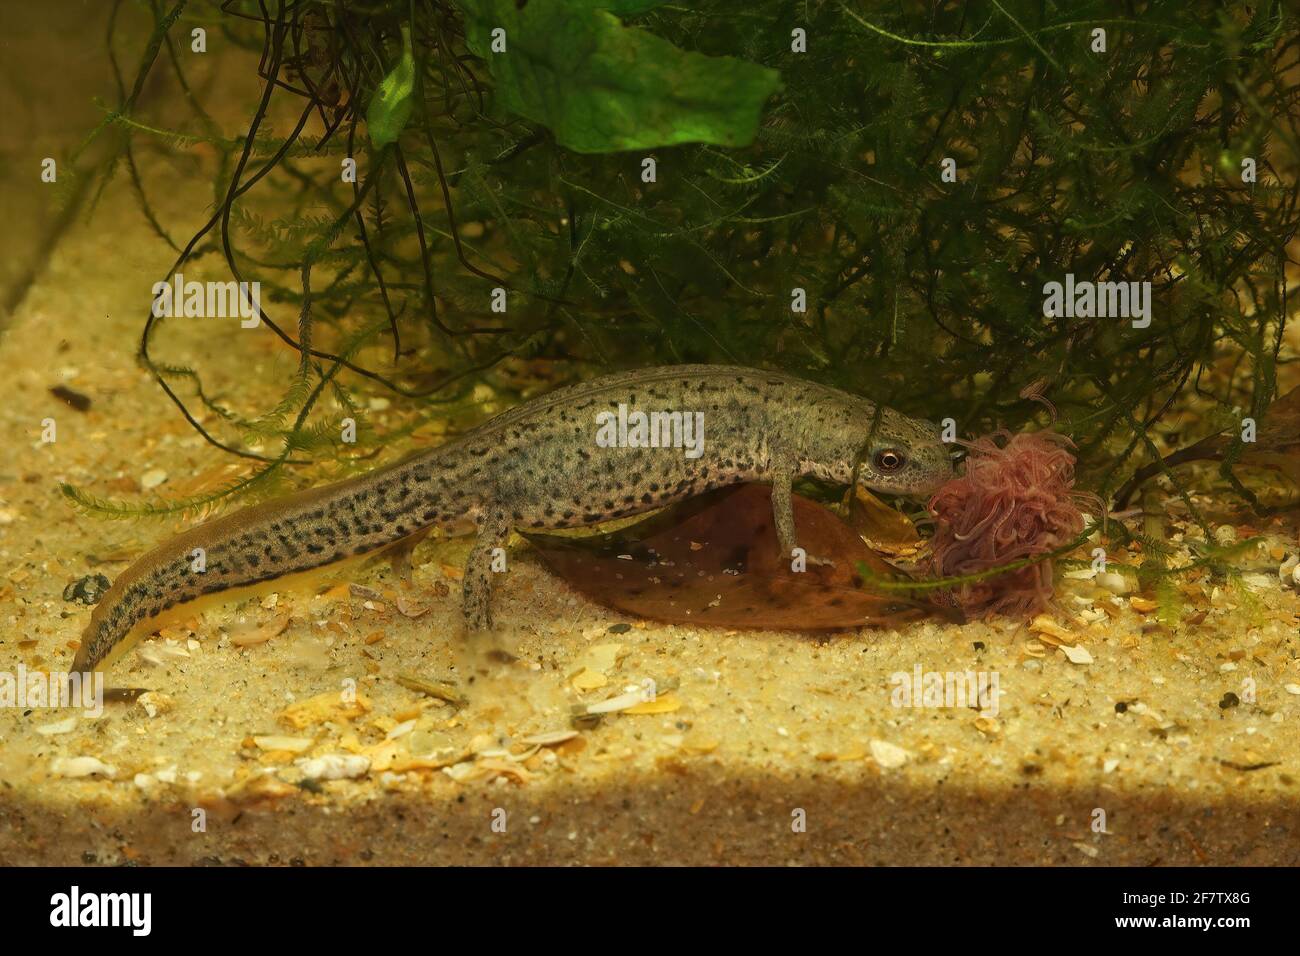 Closeup of an aquatic female Italian newt, Lissotriton italicus, feeding on Tubifex Stock Photo